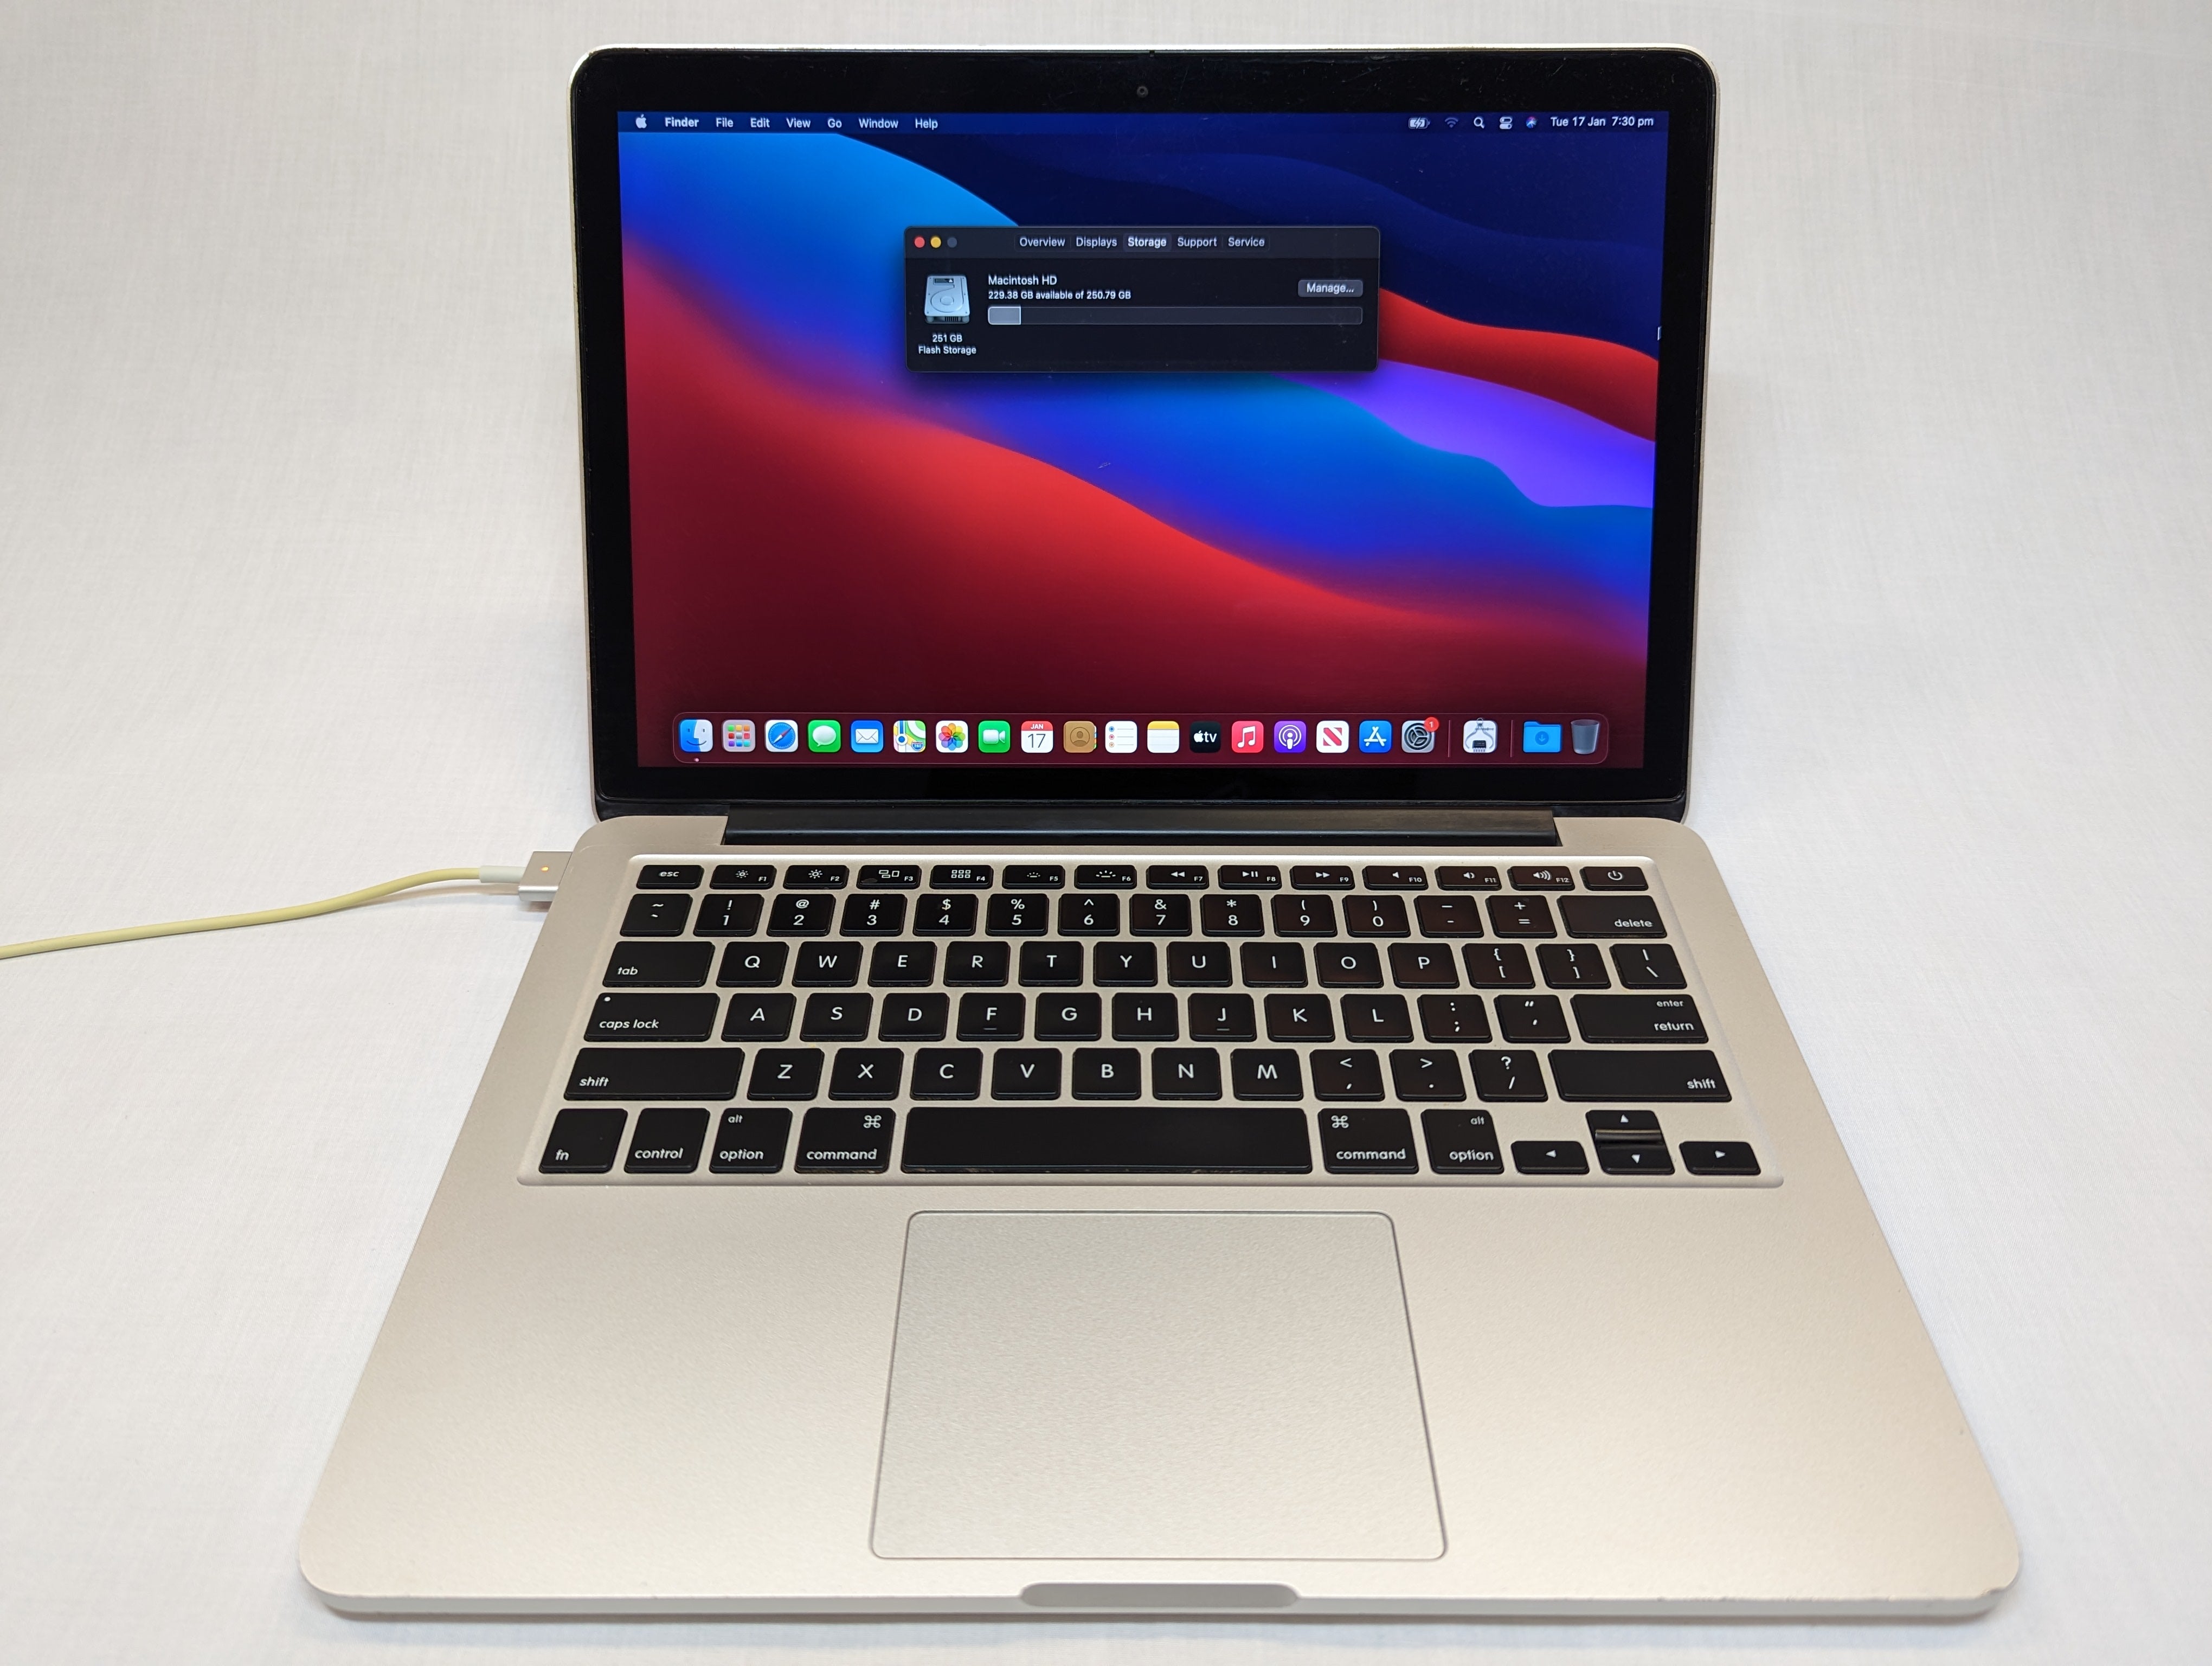 MacBook Pro Retina 13 inch (Mid 2014) - i5, 8GB RAM, 256GB